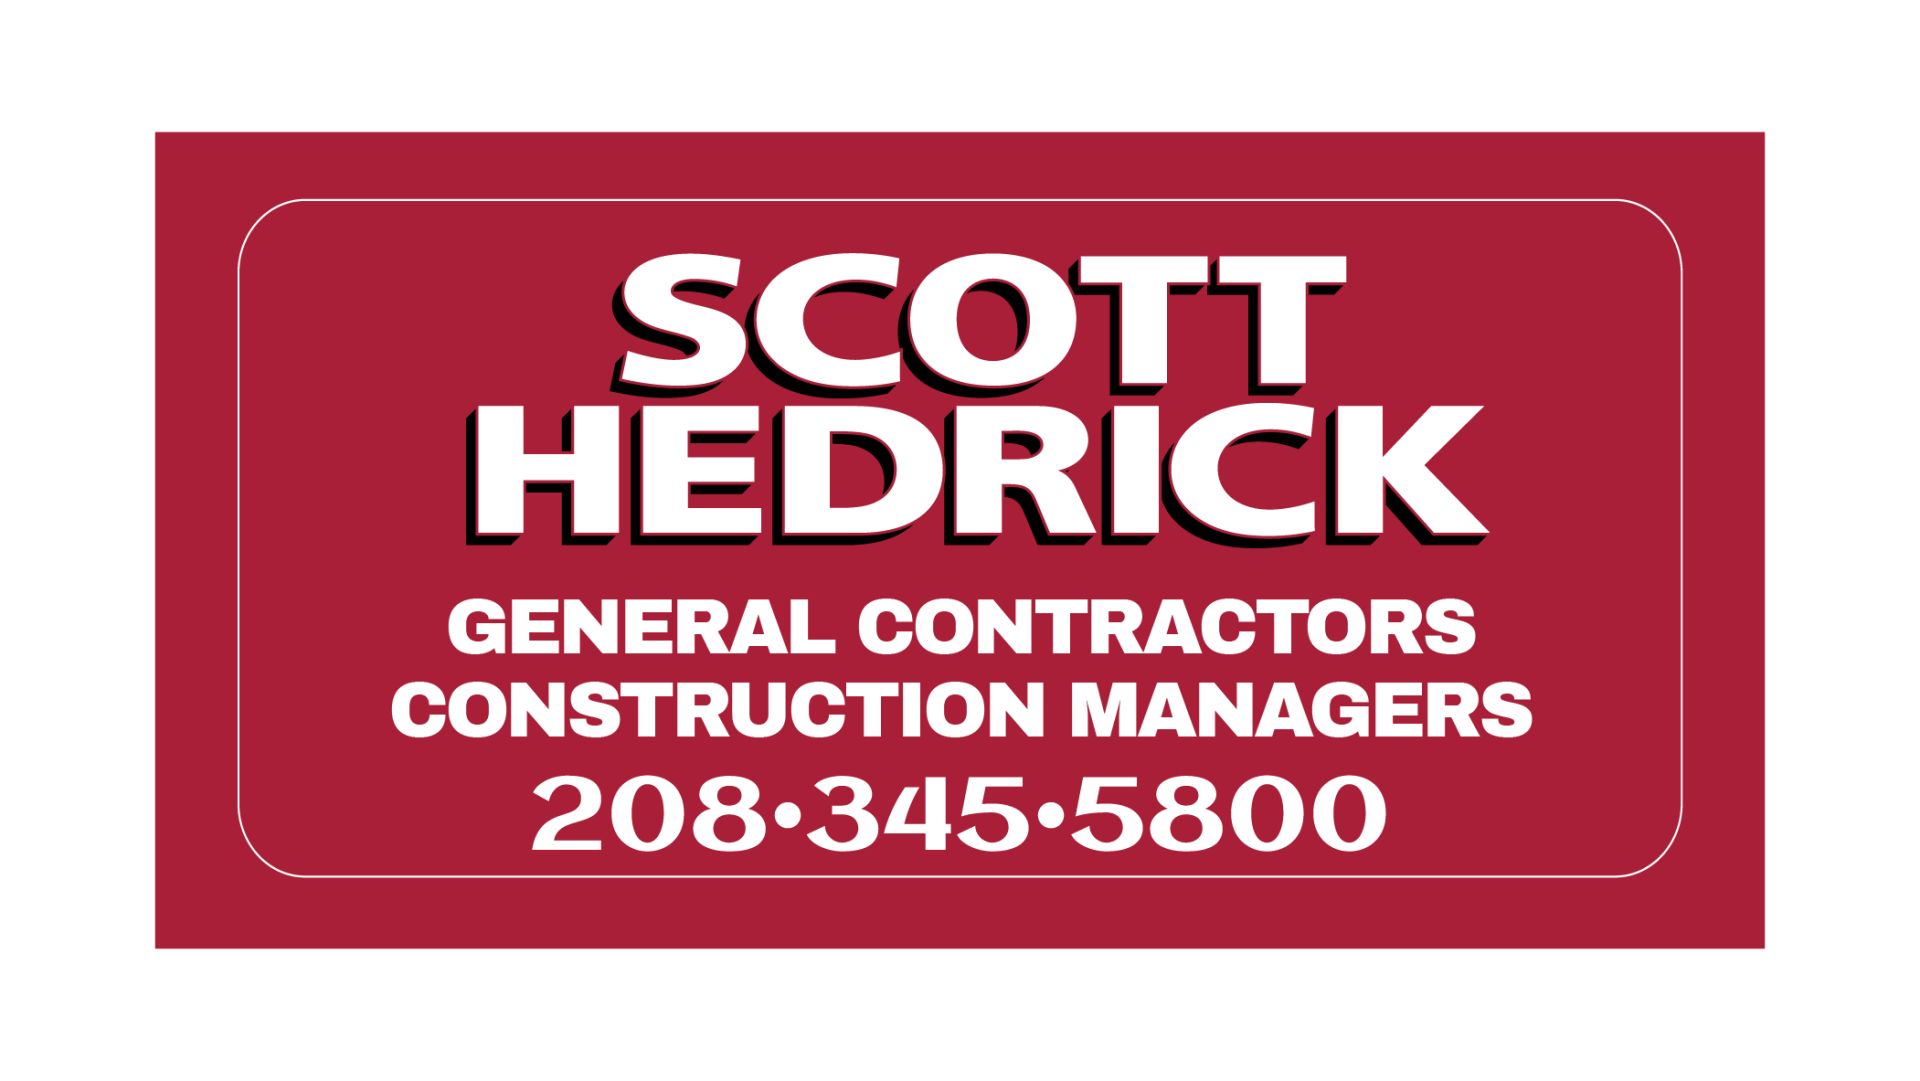 Scott Hedrick Construction